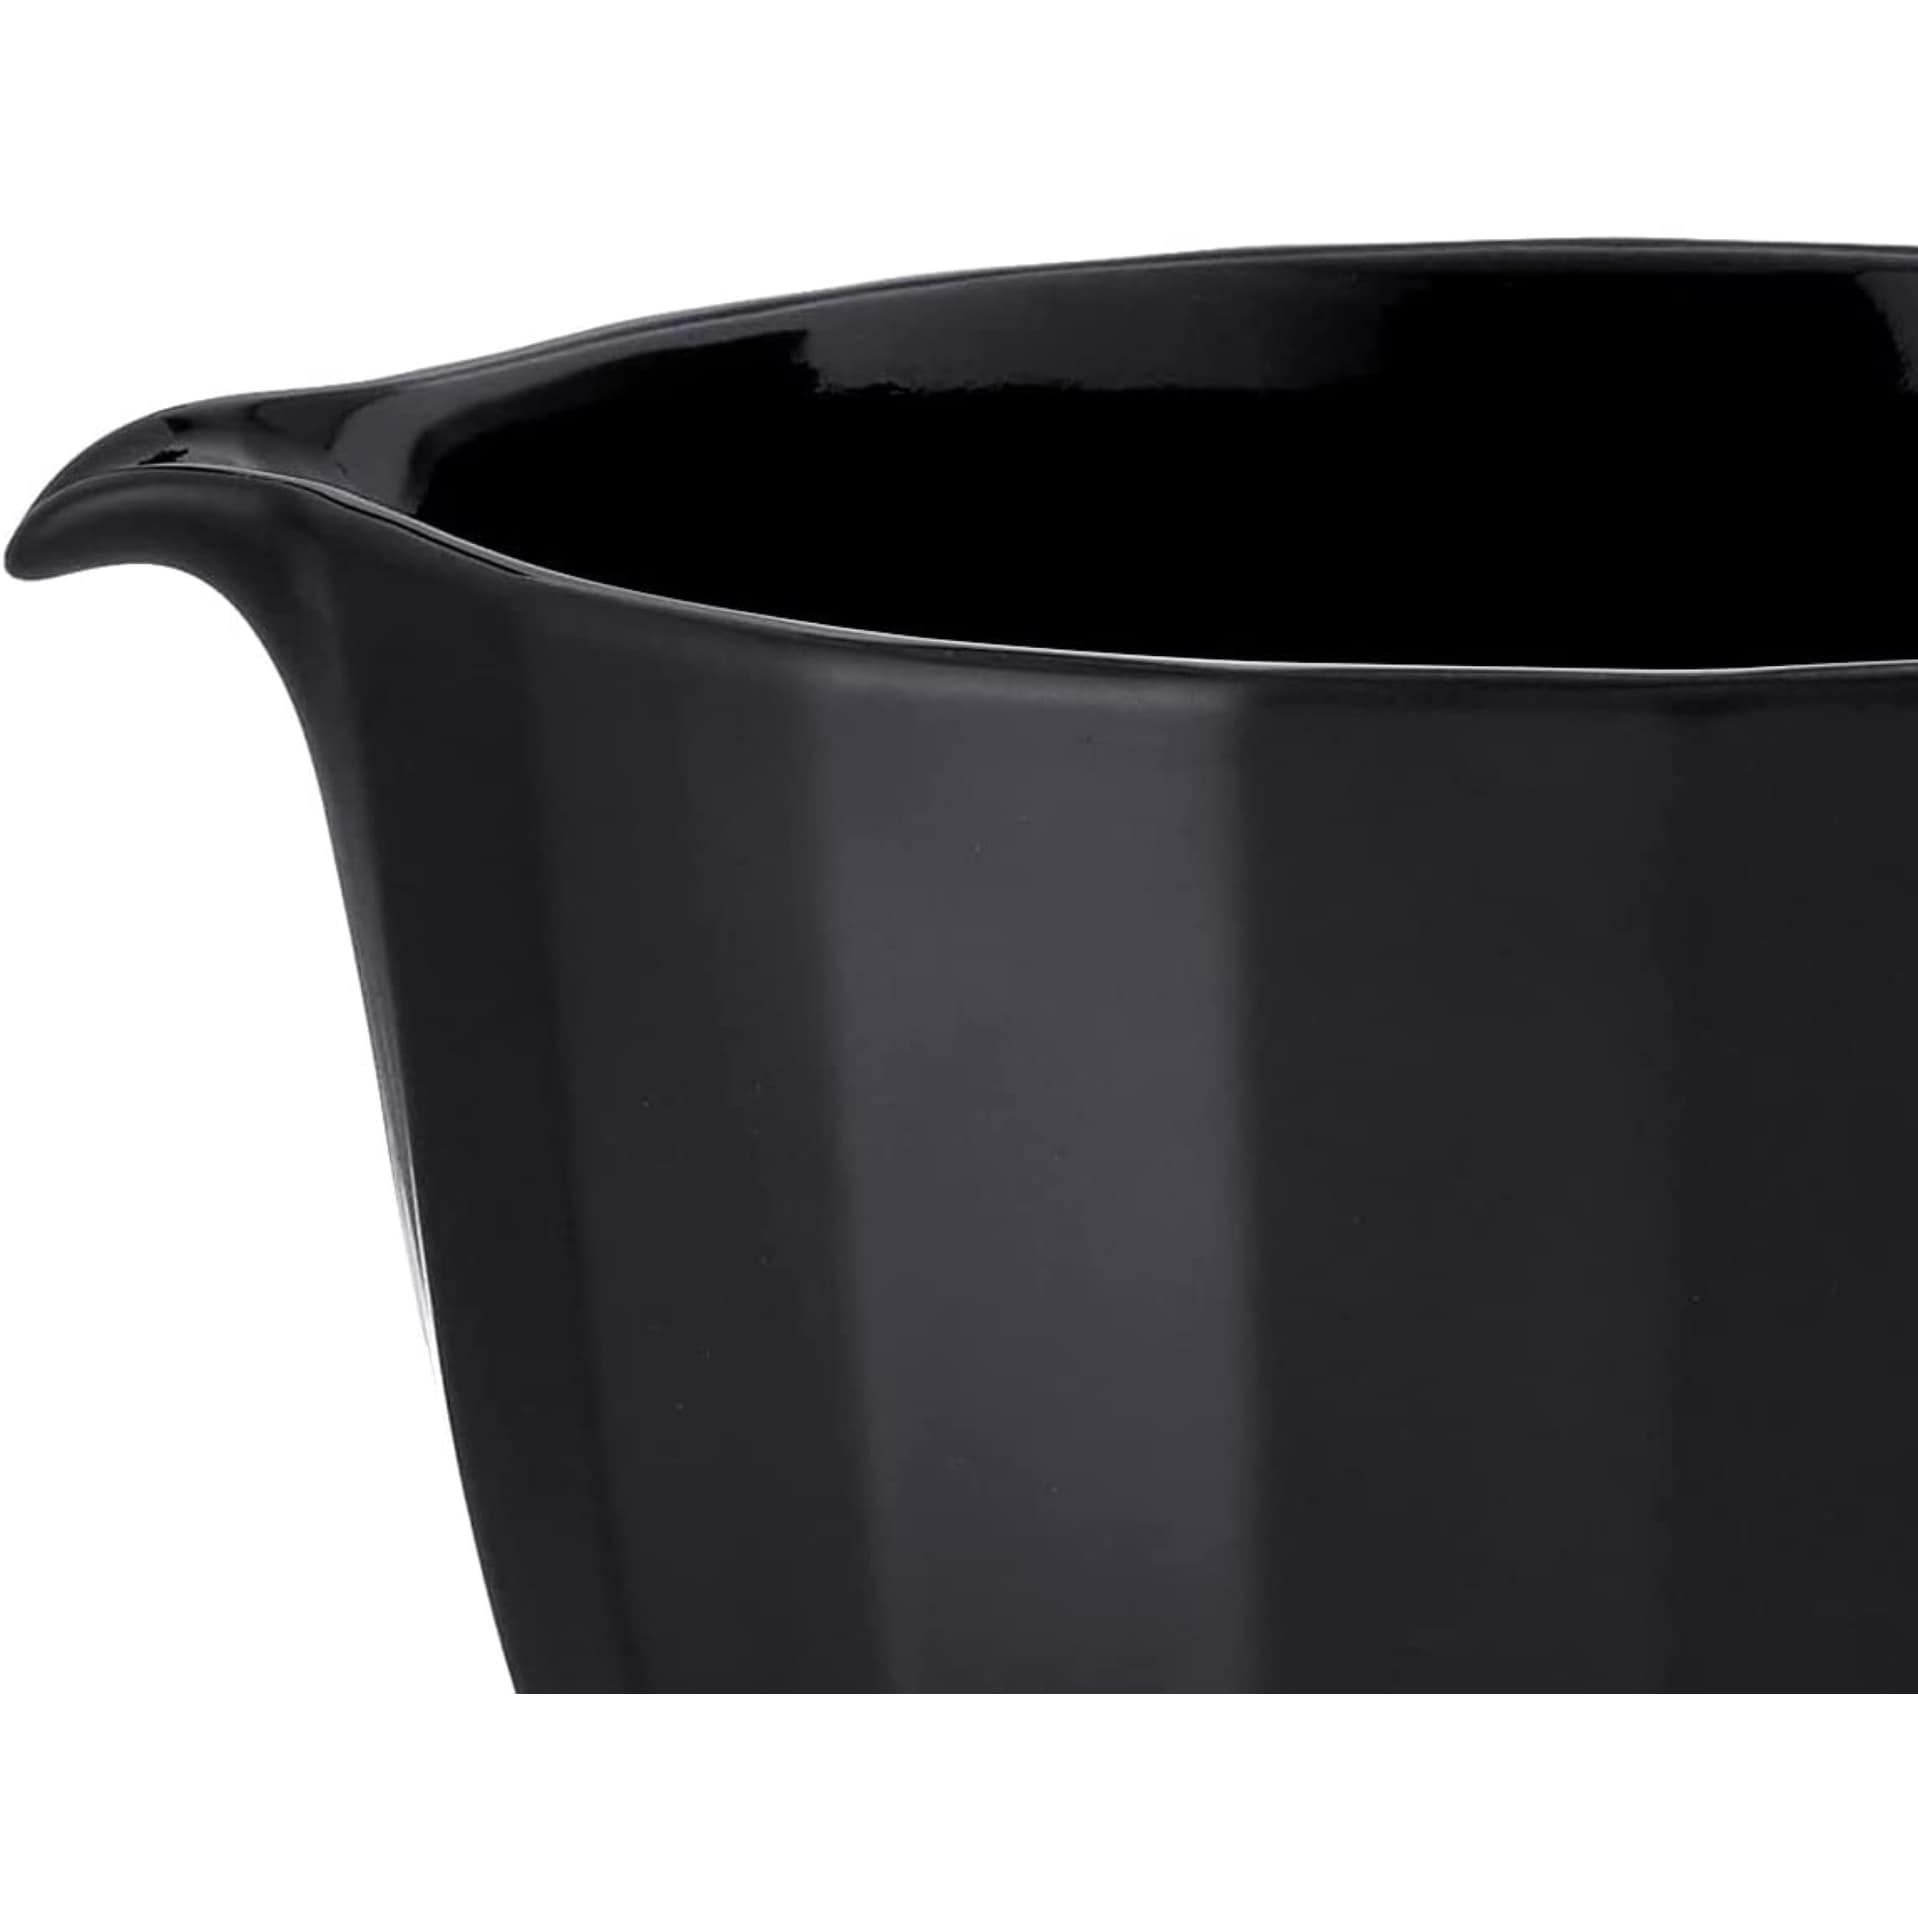 KitchenAid Stand Mixer Matte Black Shell 5-Quart Ceramic Mixing